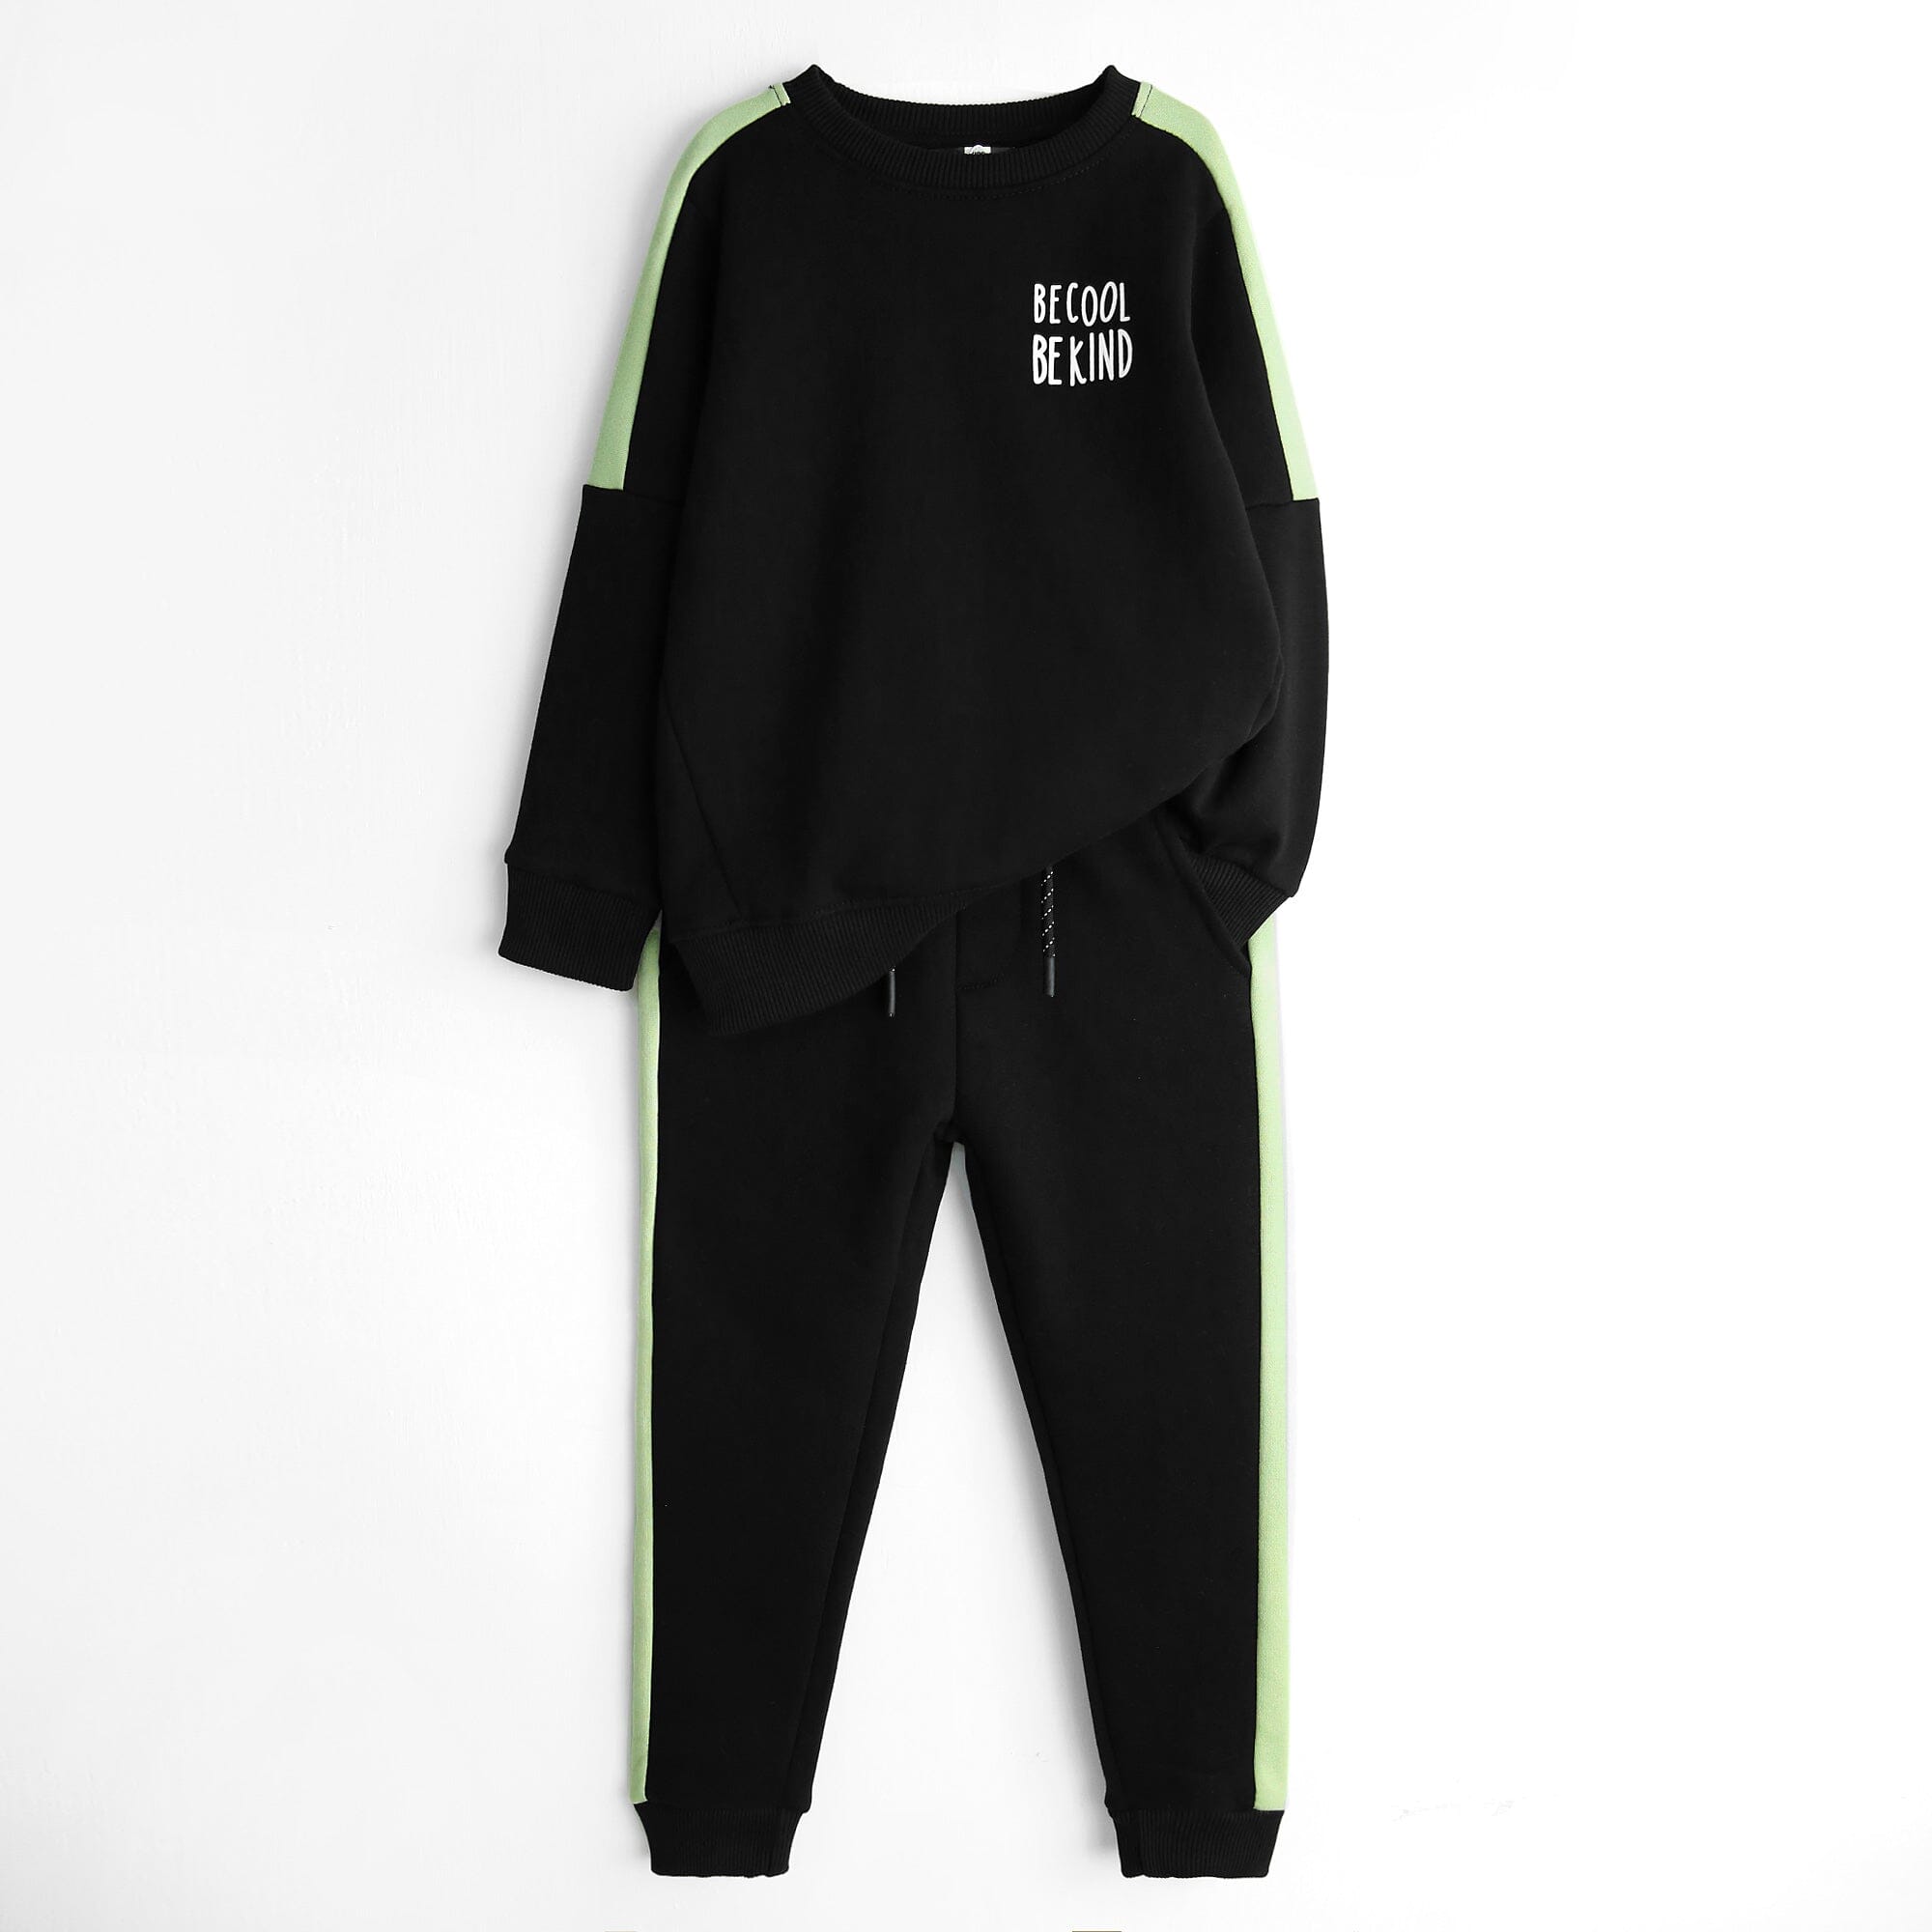 Premium Quality Black Cut & Sew Printed Fleece Track Suit For Kids (121069)